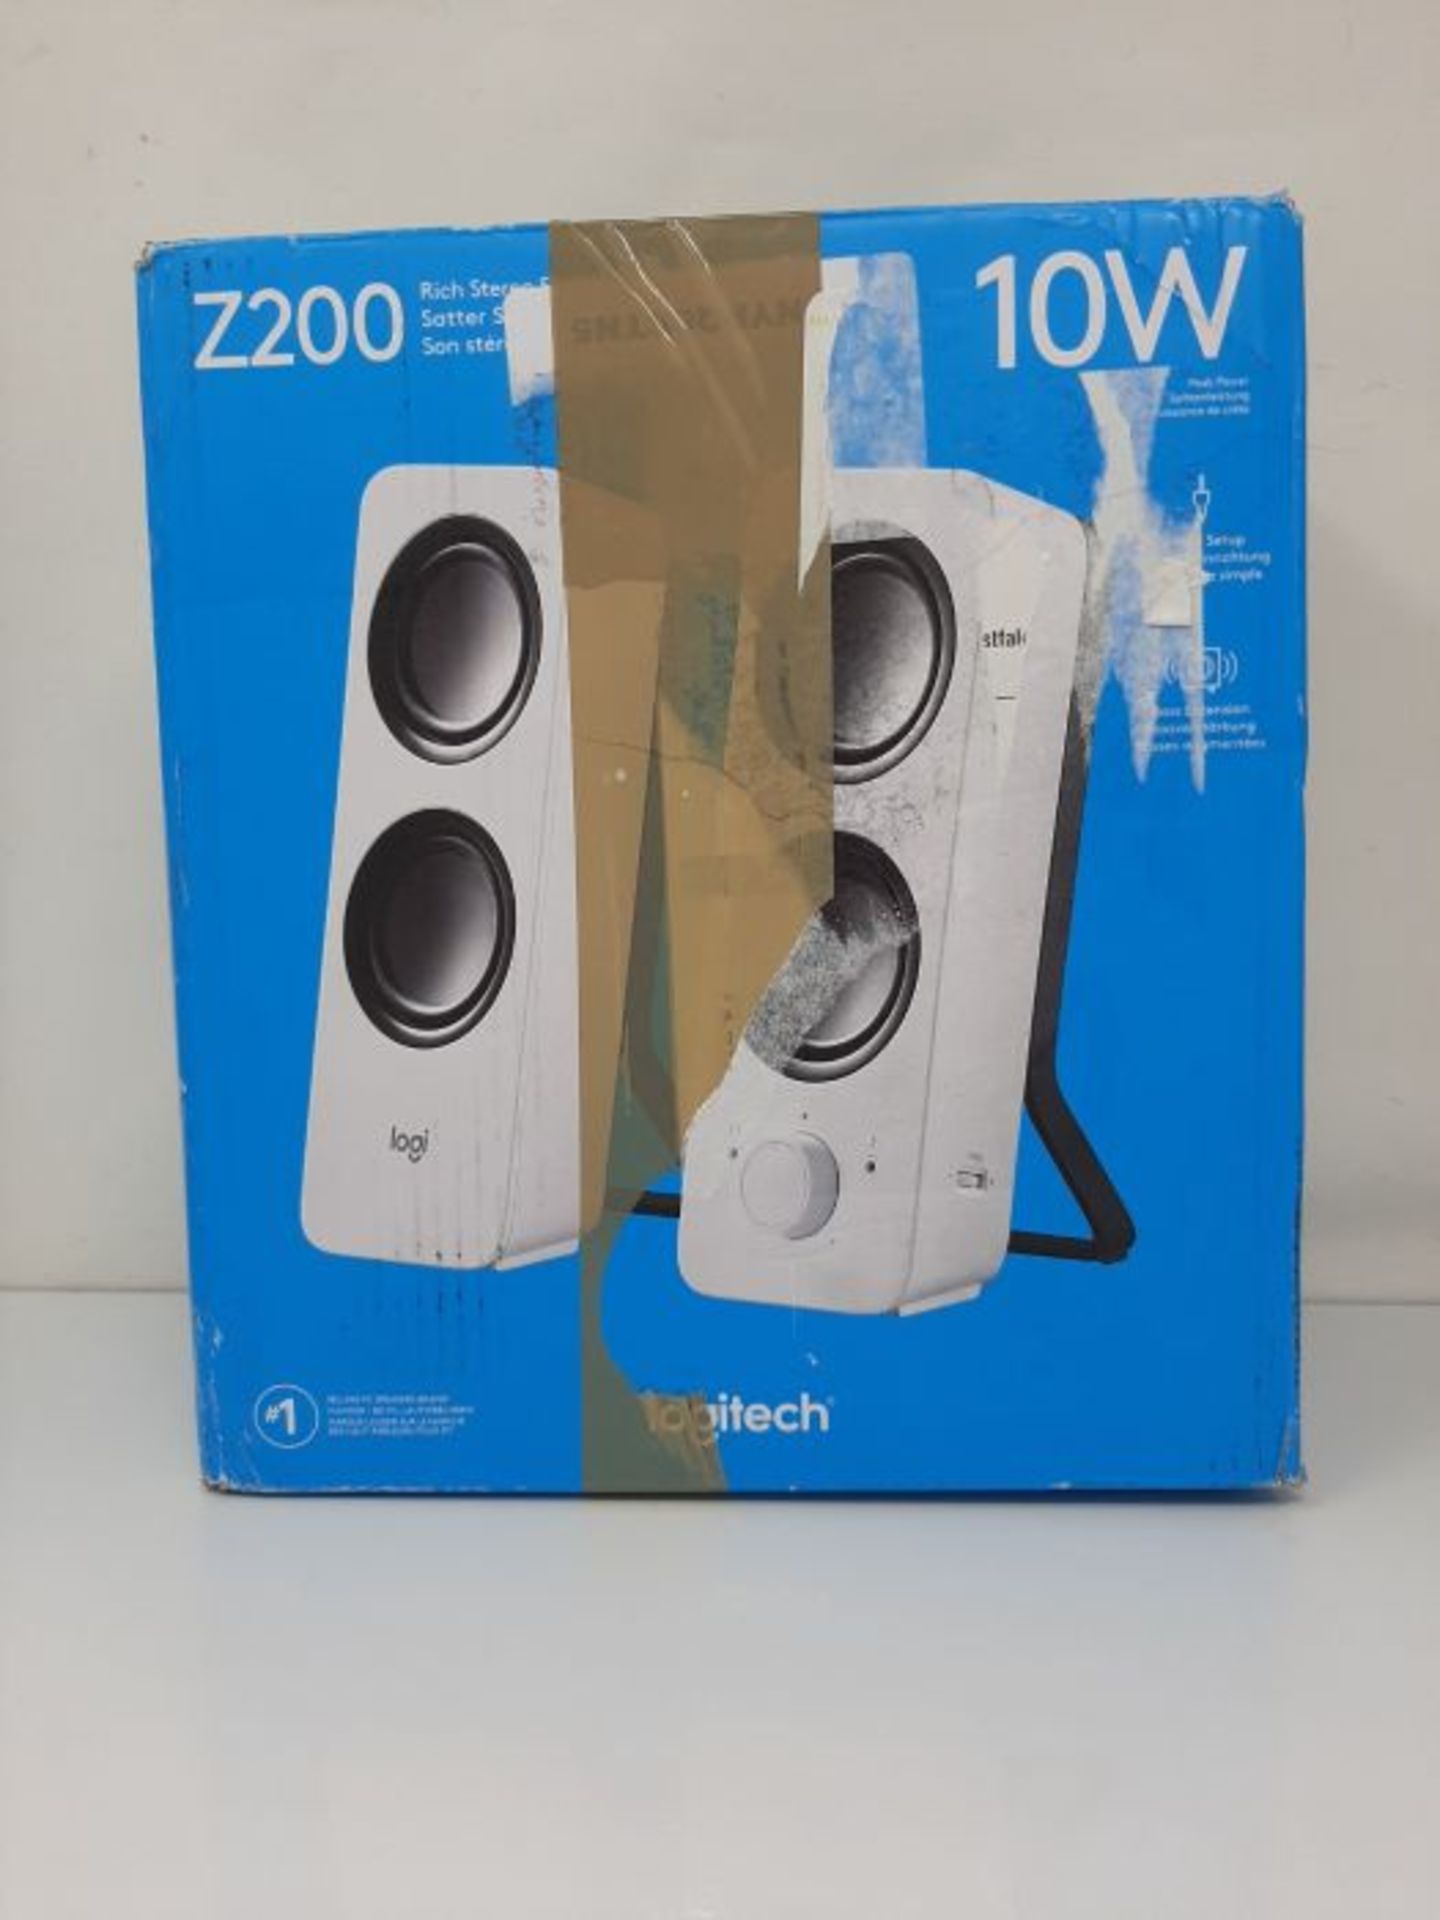 Logitech Z200 PC Speakers, Full Stereo Sound, 10 Watts Peak Power, 2 x 3.5mm Audio Inp - Image 2 of 3